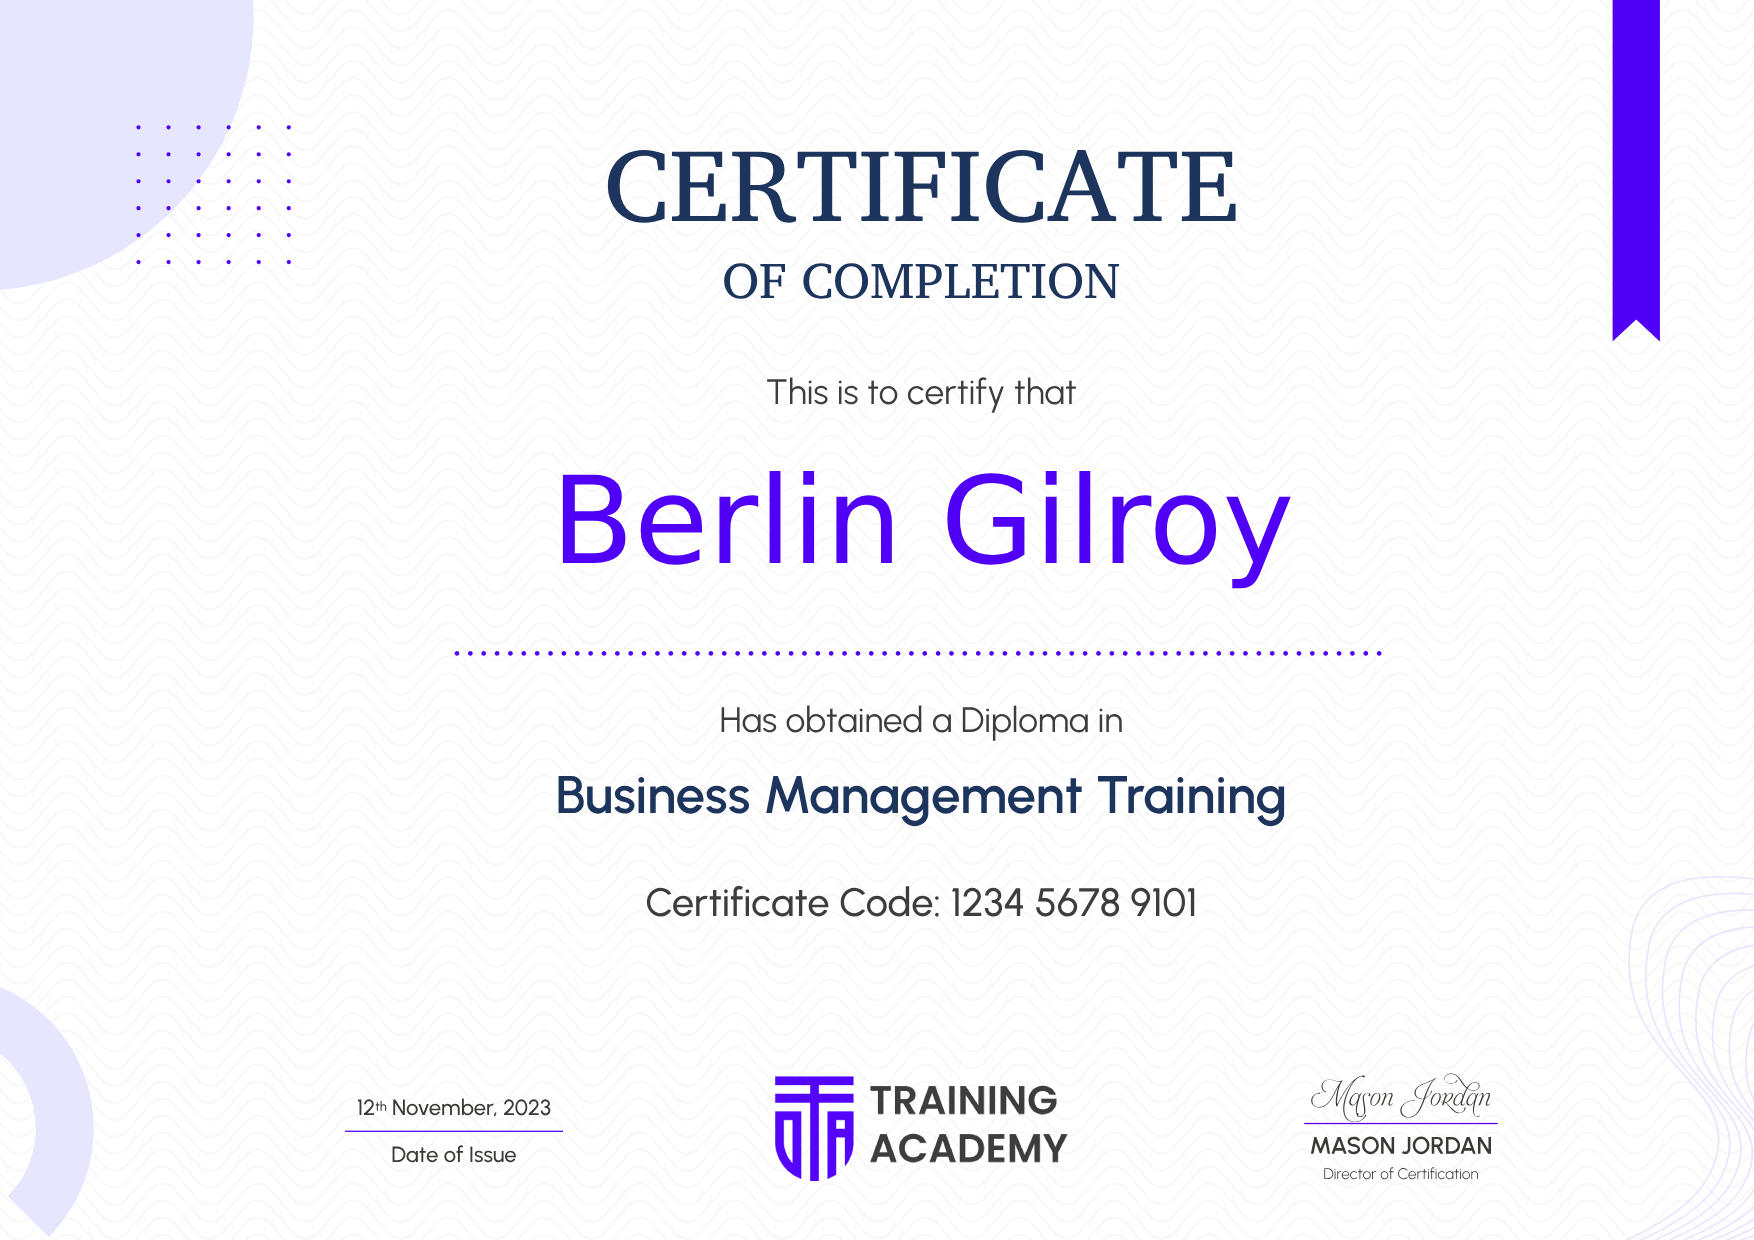 Online Training Academy demo Certificate Sample - Online Training Academy